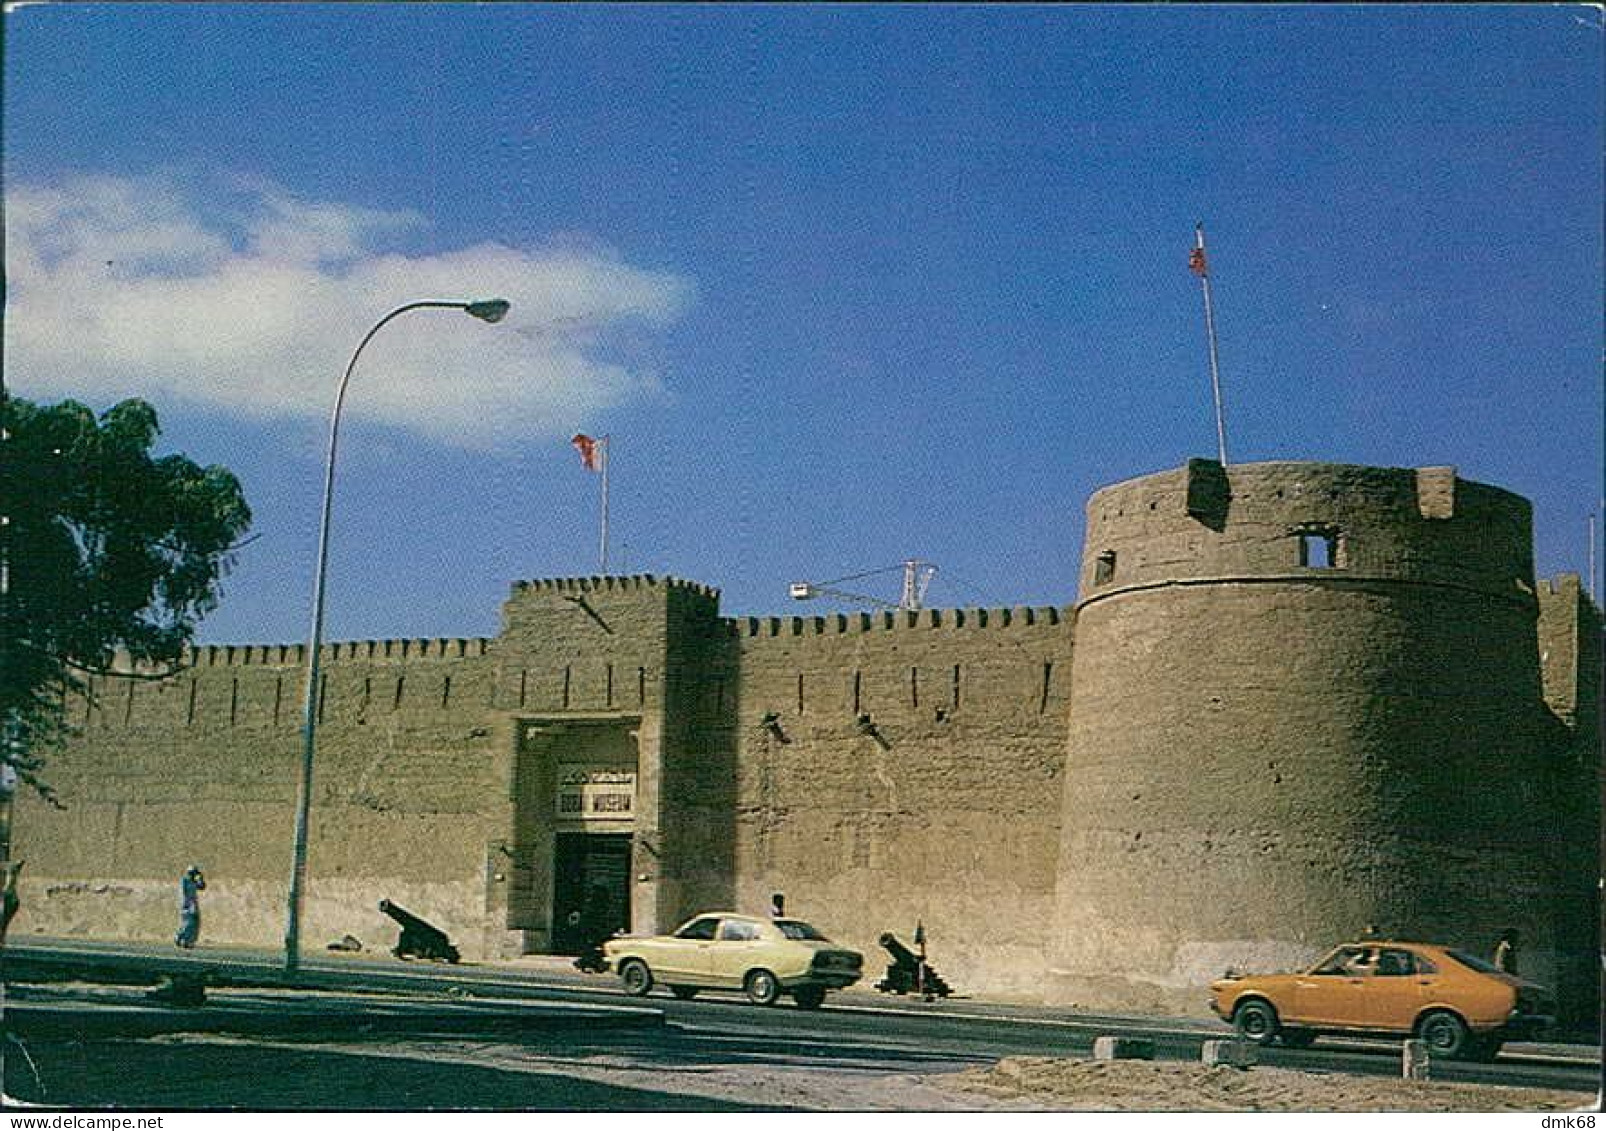 UNITED ARAB EMIRATES - DUBAI MUSEUM - PHOTO & COP. FAROOK INTERN. STATIONERY - 1970s/80s (17310) - Ver. Arab. Emirate